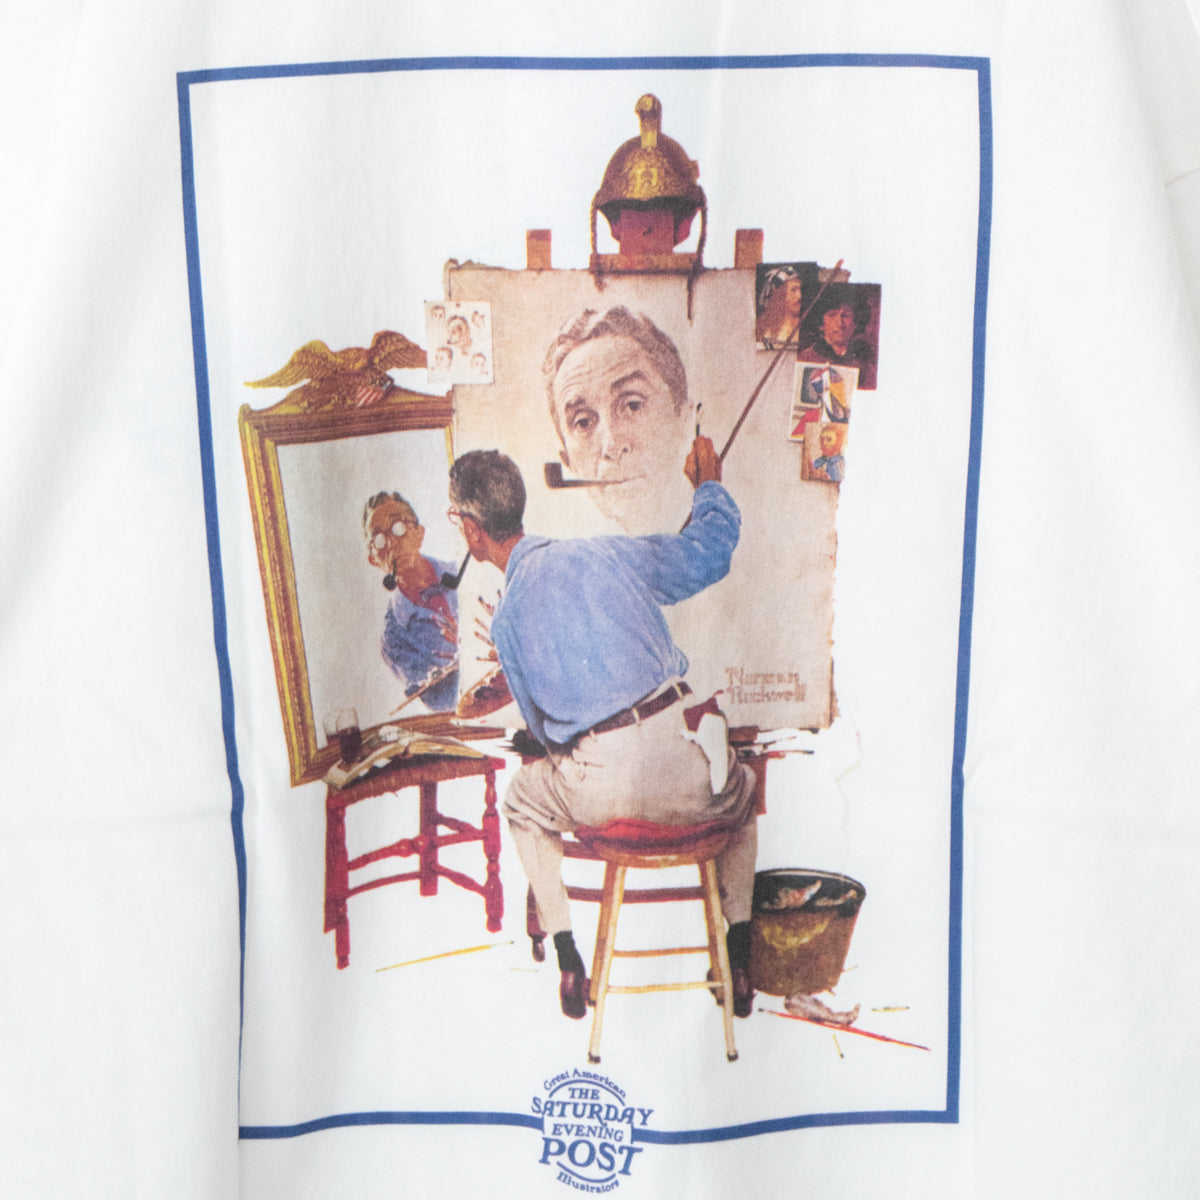 POST Norman Rockwell Print T-shirt WHITE